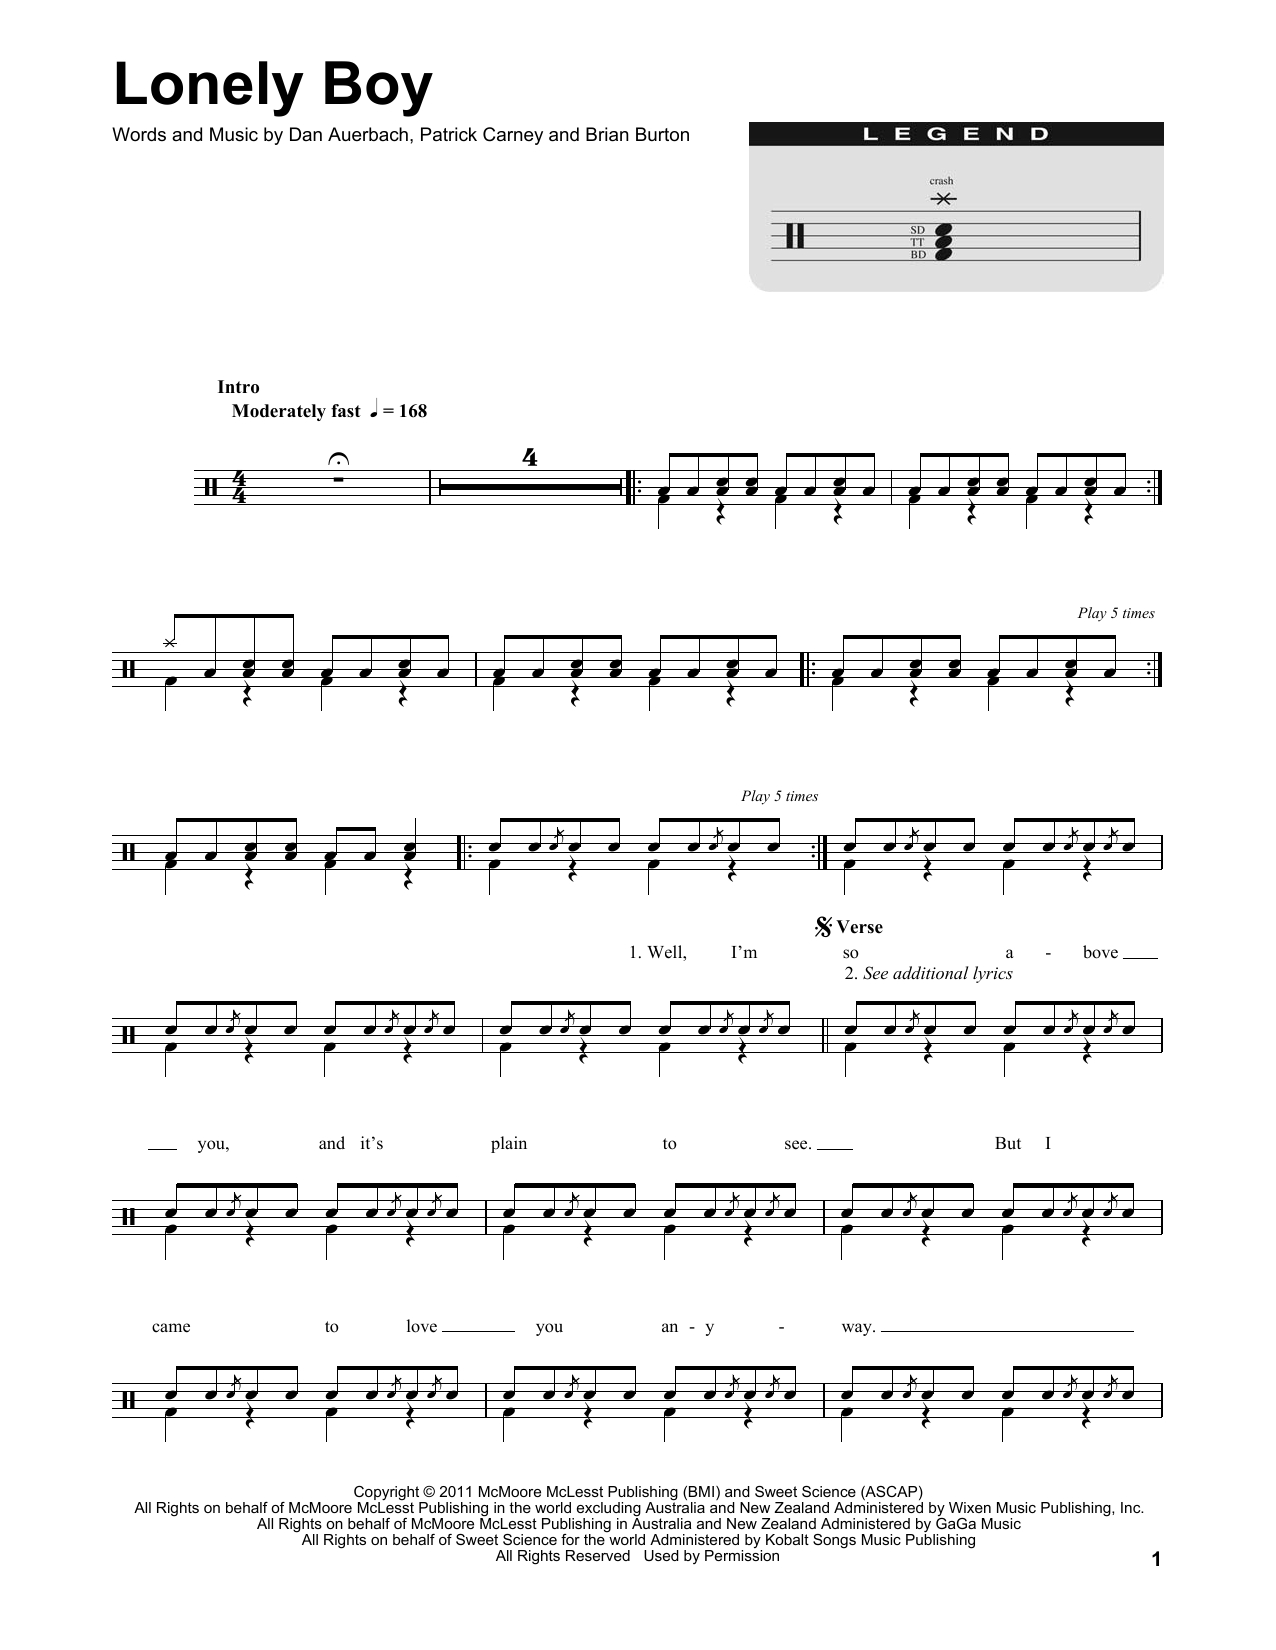 Little Black Submarines Chords Sheet Music Digital Files To Print Licensed The Black Keys Digital